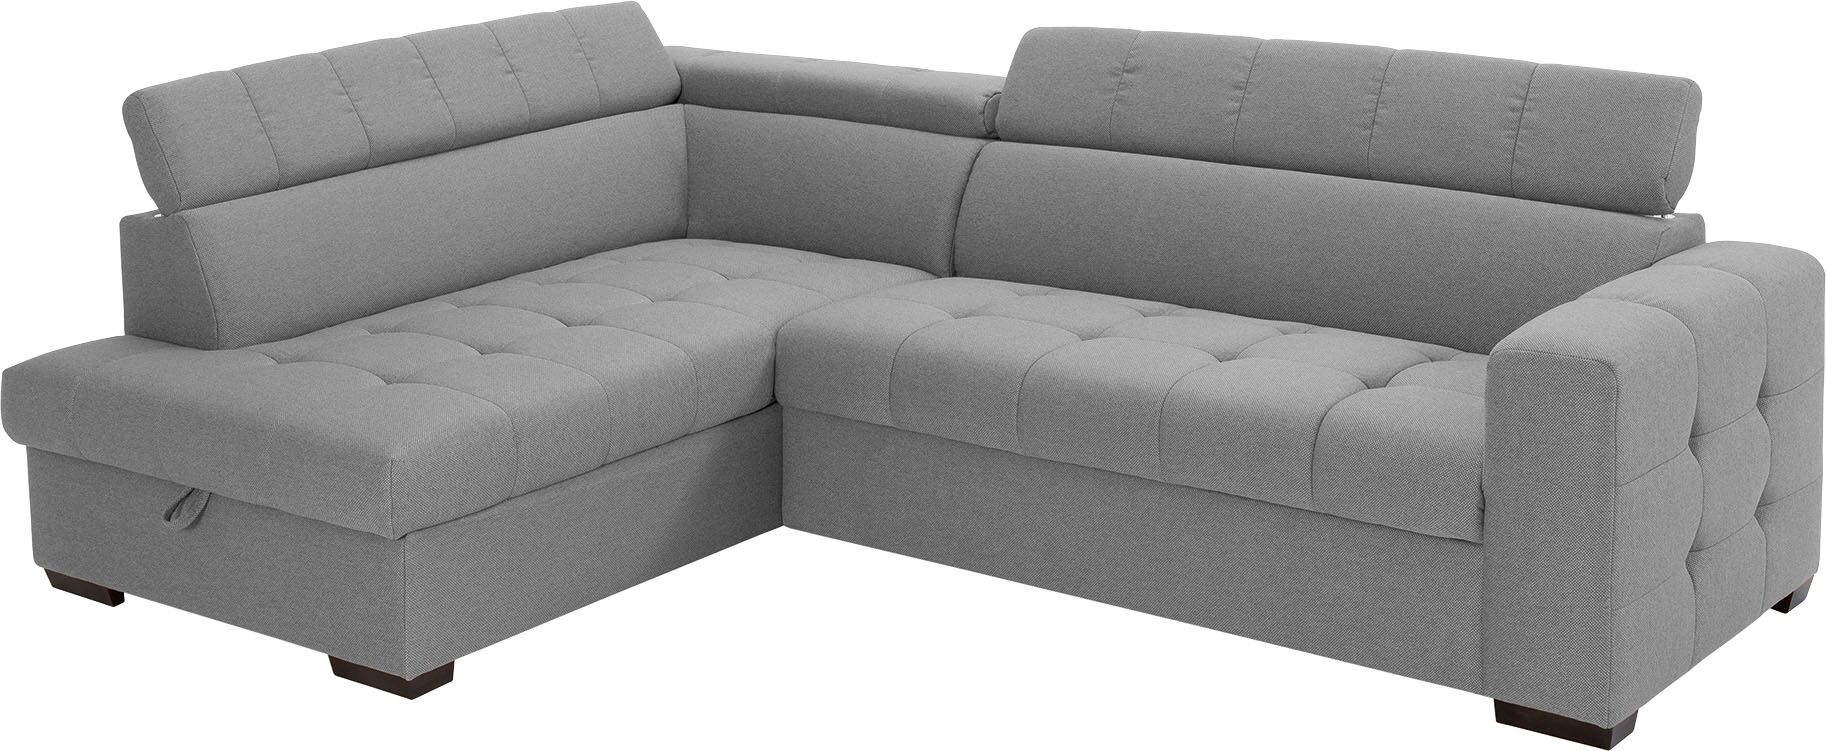 exxpo - sofa fashion Ecksofa, Steppung im Sitzbereich, Wahlweise mit... silberfarben